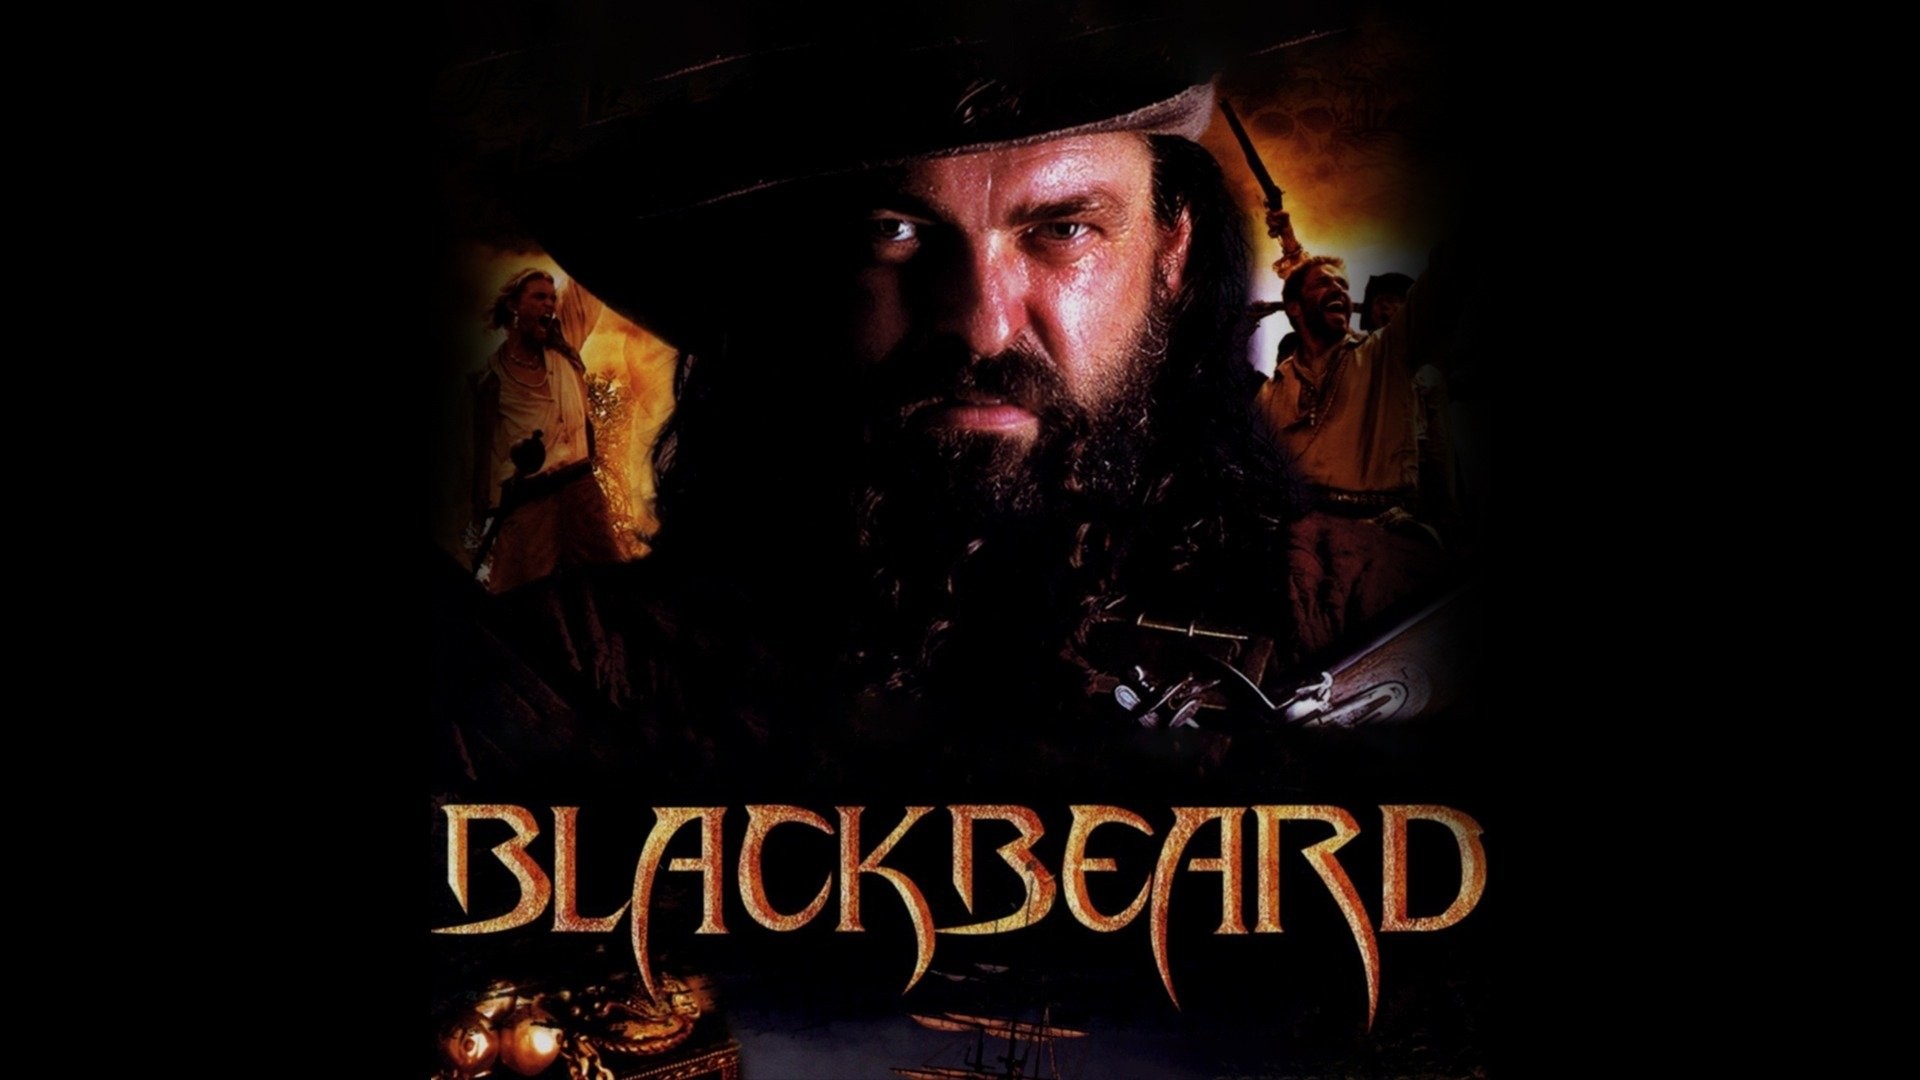 Blackbeard Archives - Page 5 of 5 - HIGH ON CINEMA